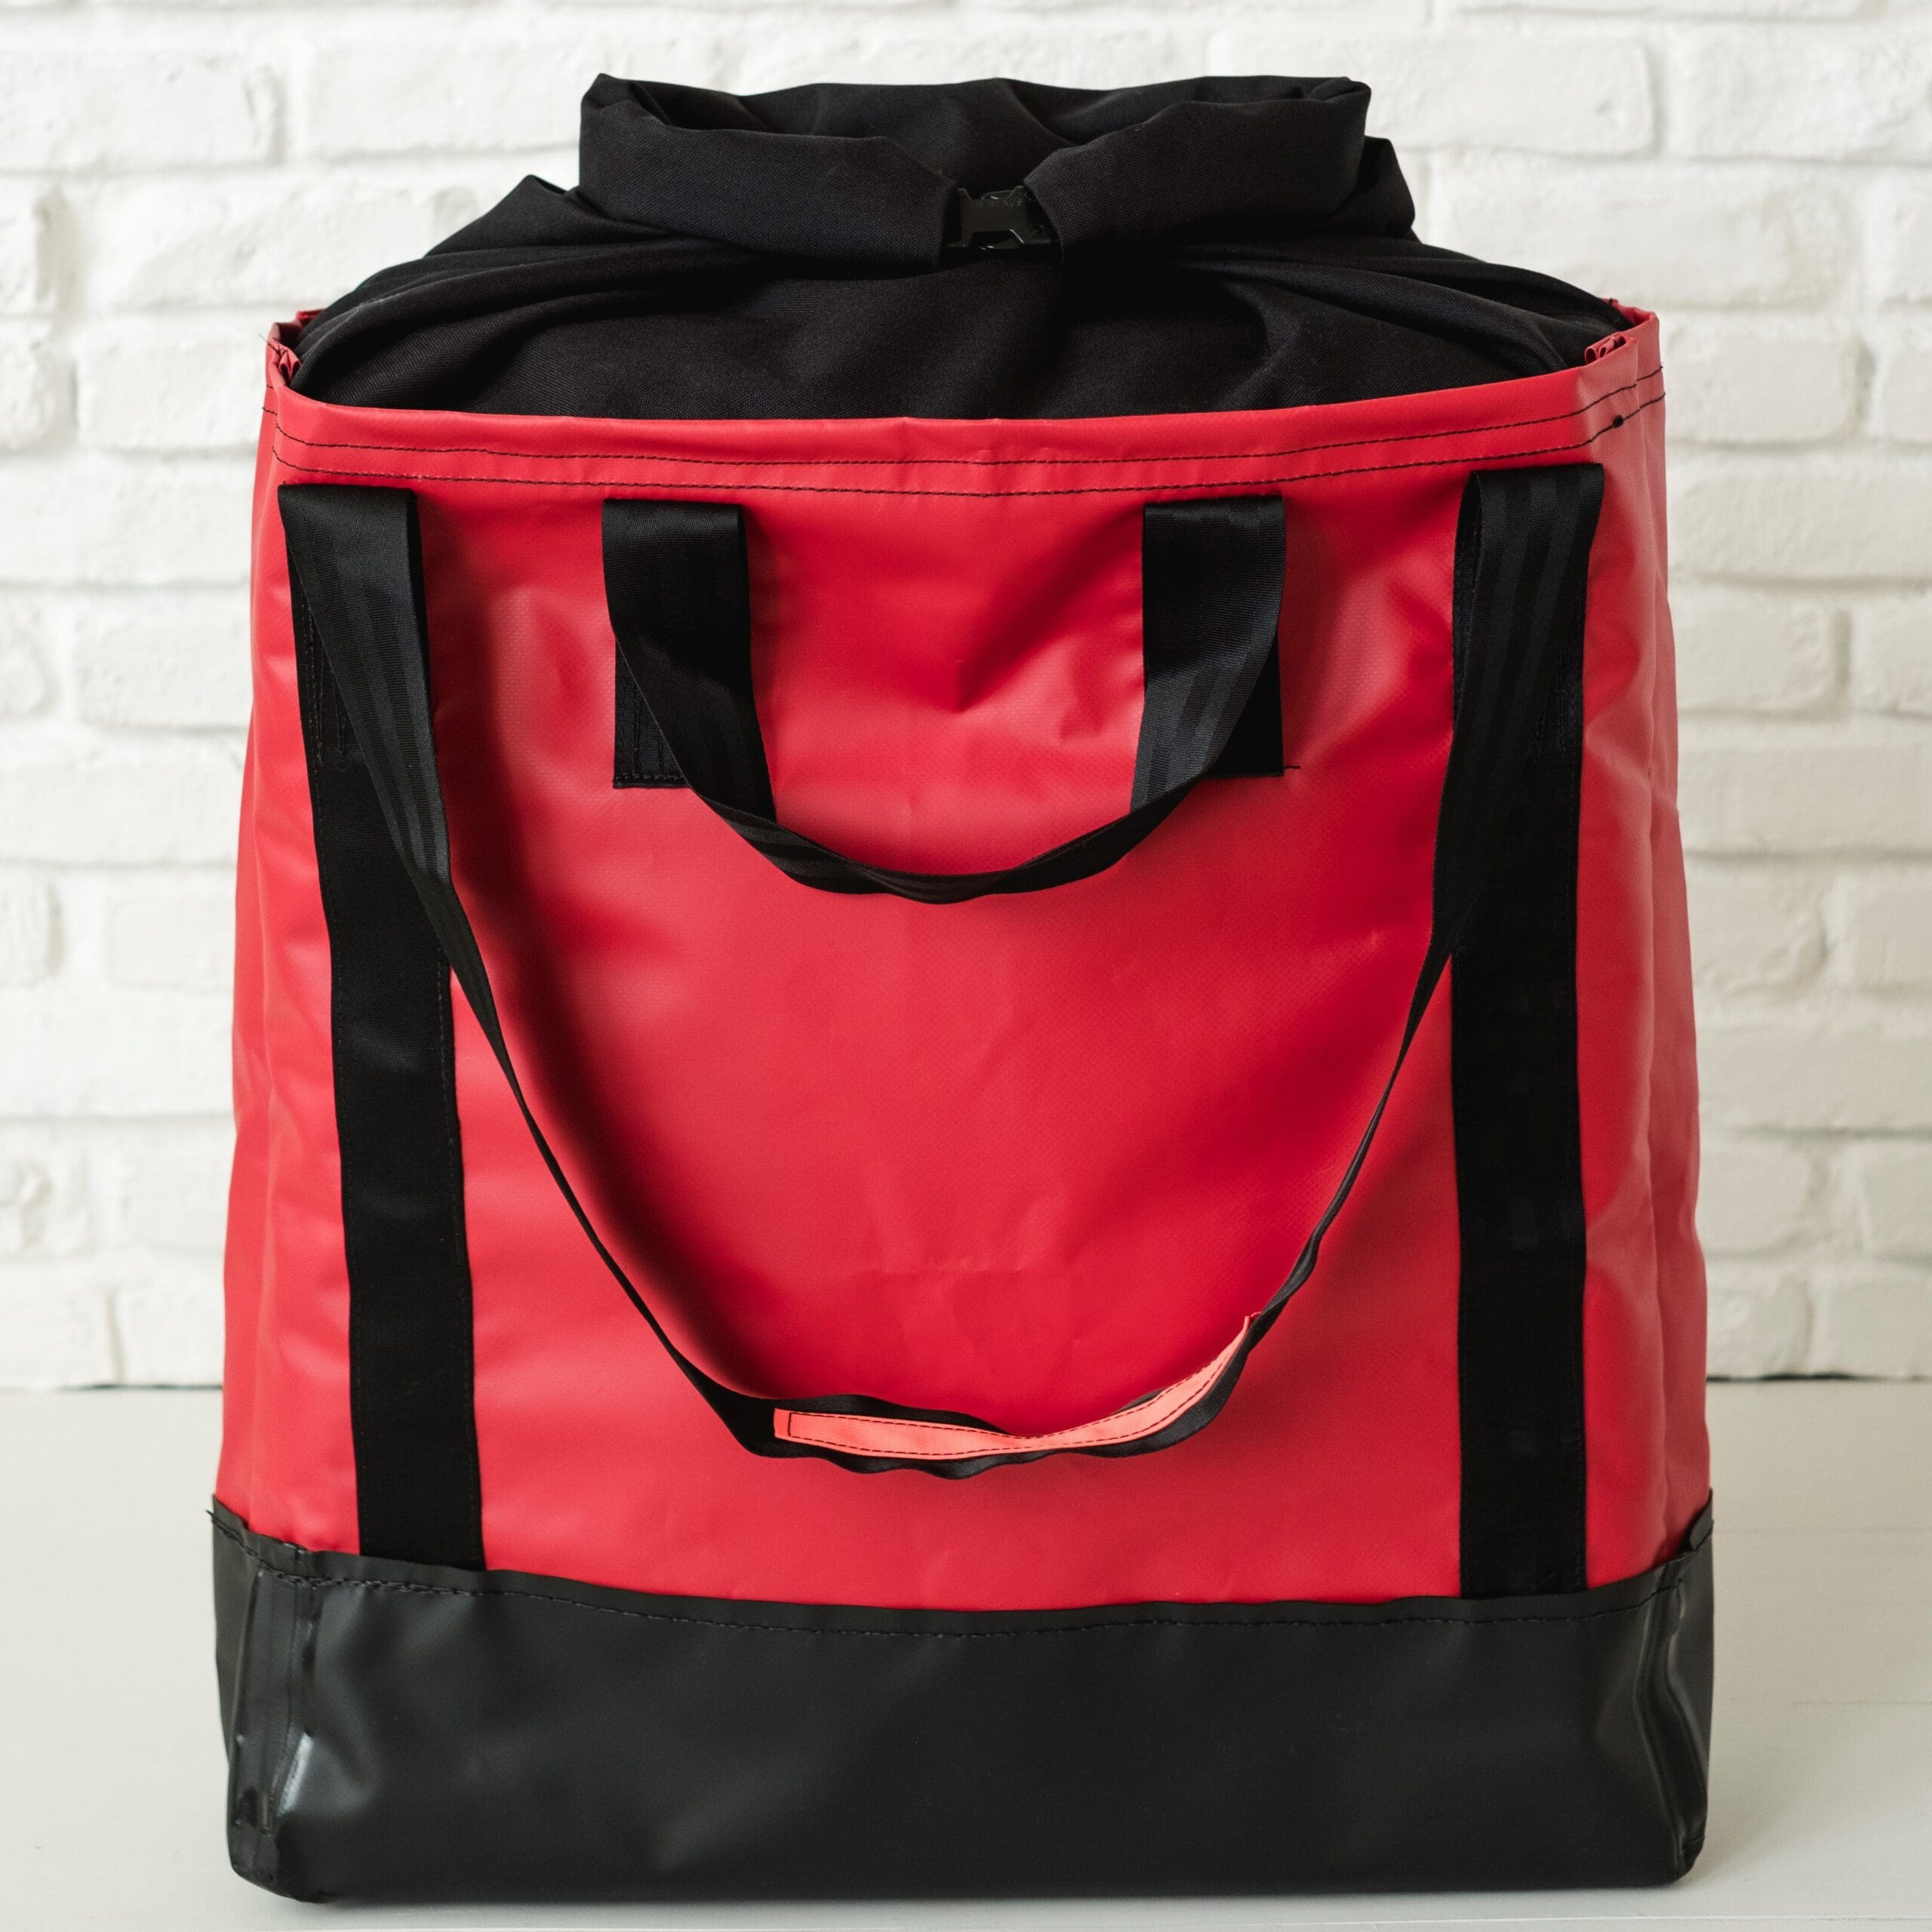 Bag closet facelift – Buy the goddamn bag